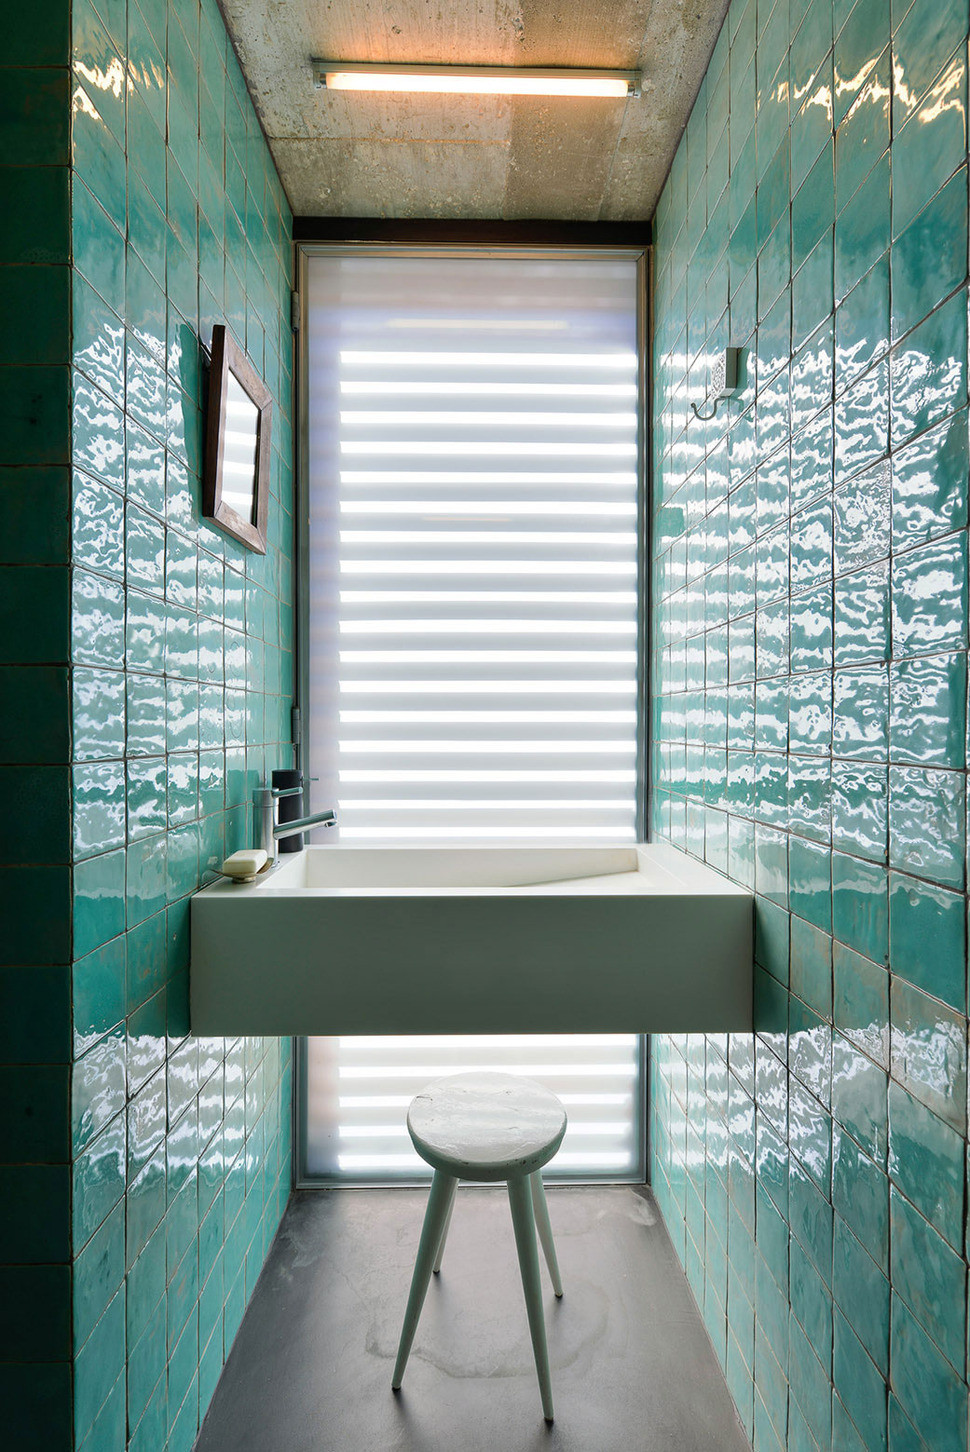 Modern Tile Bathroom
 Top 10 Tile Design Ideas for a Modern Bathroom for 2015